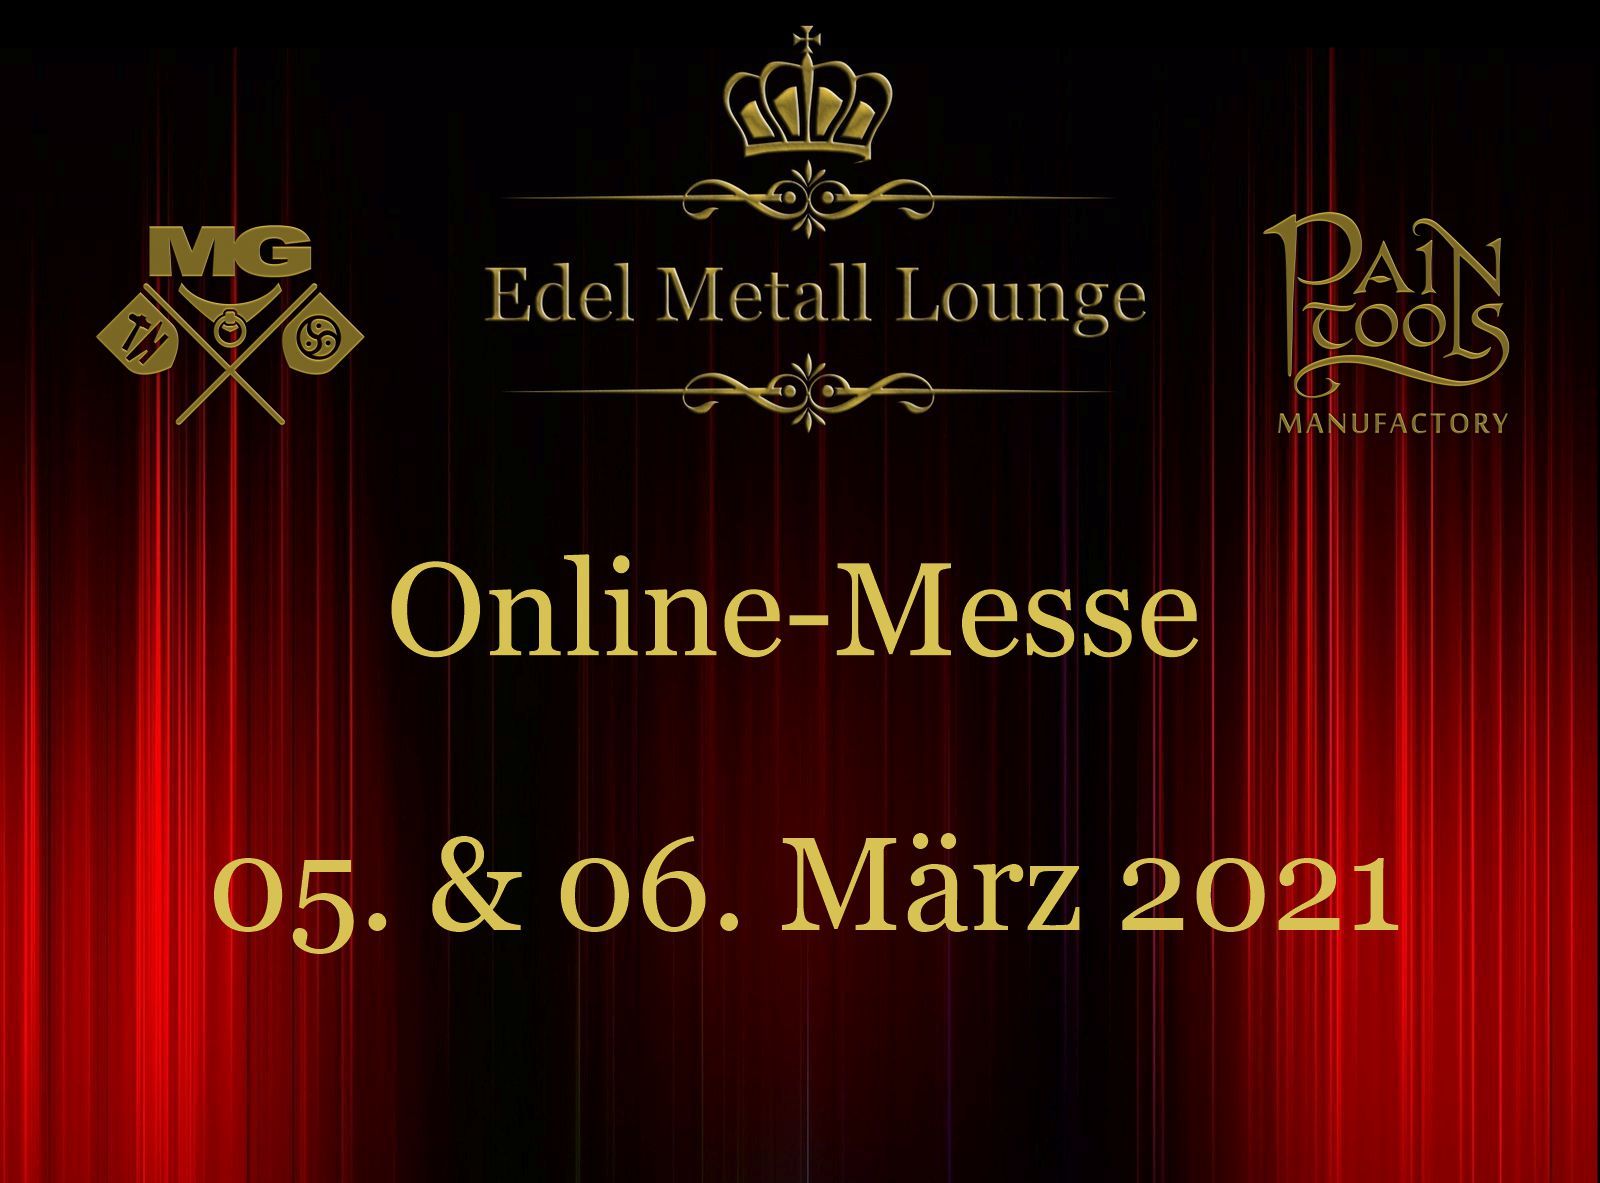 Online-Messe der Edel-Metall-Lounge